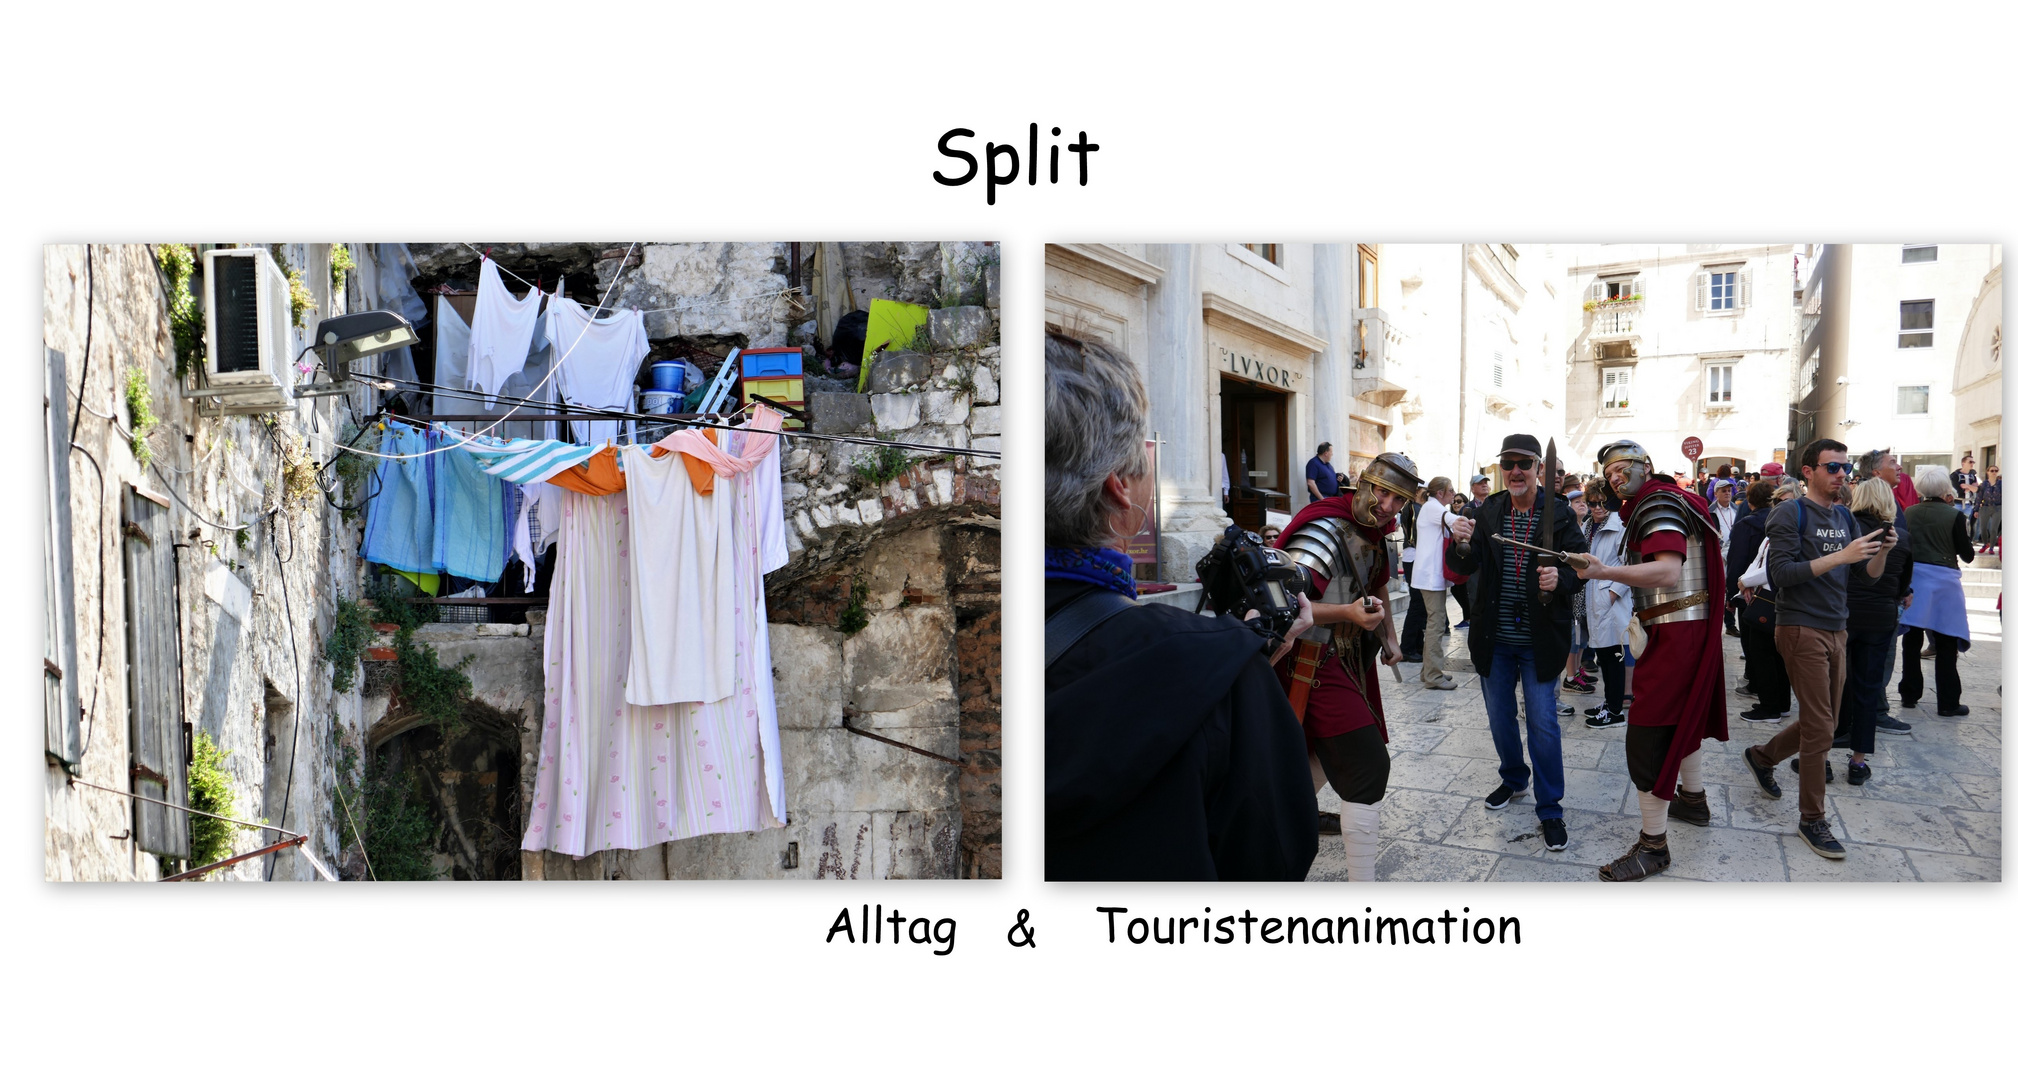 Balkan 28: Alltag & Touristenanimation